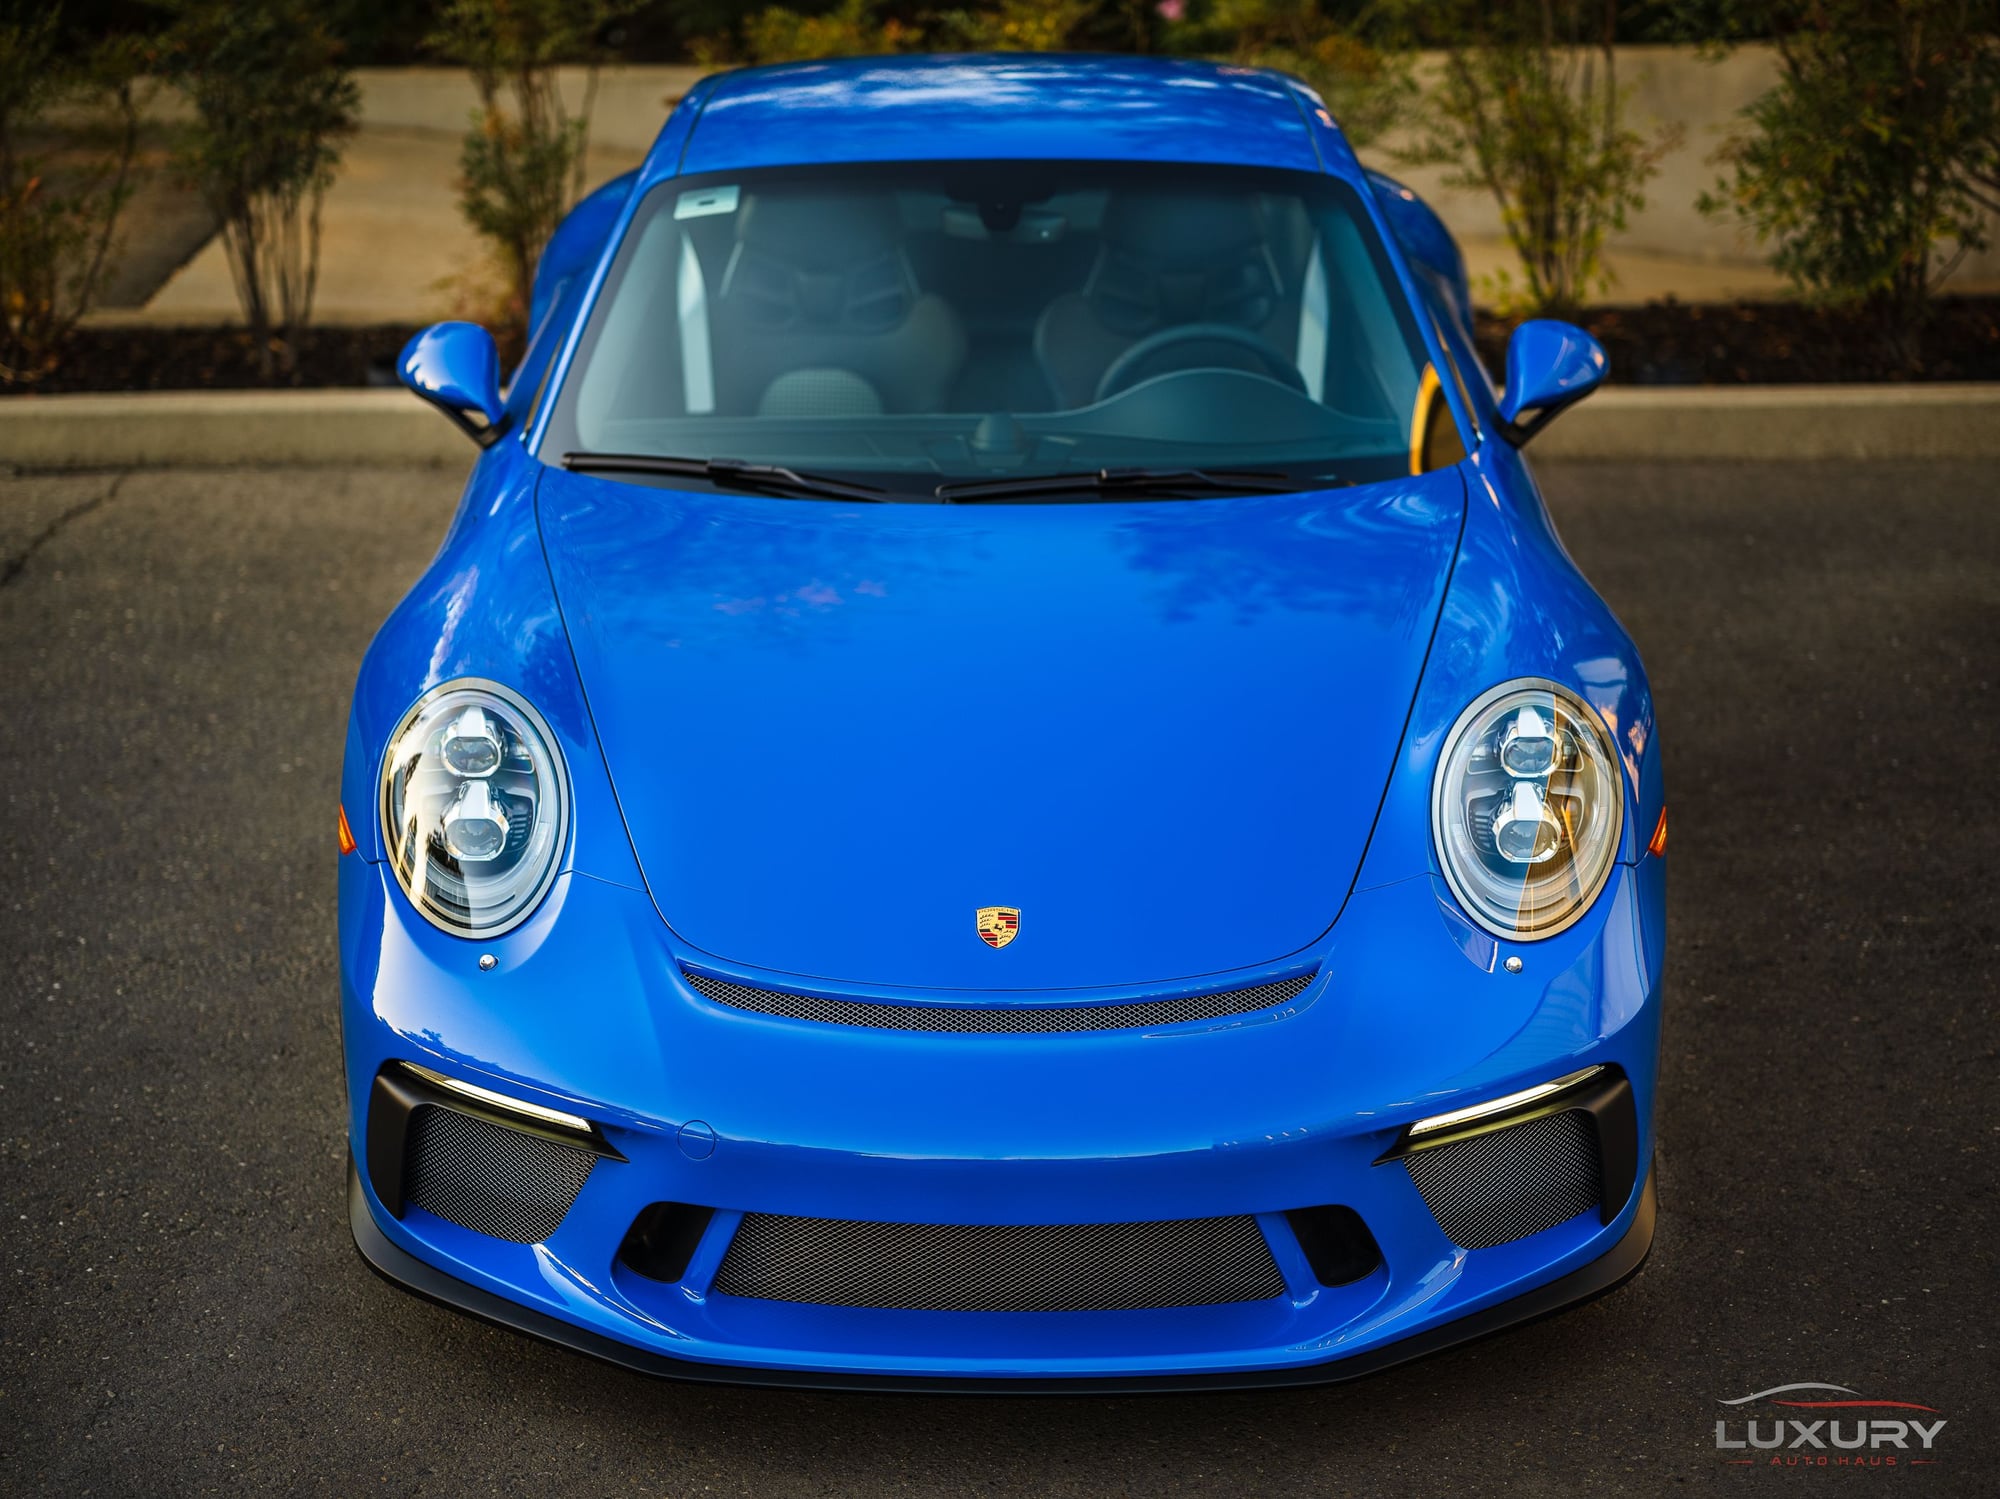 2019 Porsche GT3 - 2019 Porsche 911 GT3 Touring PTS Nogaro Blue Metallic - CXX, 400 Miles, PPF, 1 of 1 - Used - VIN WP0AC2A91KS149139 - 410 Miles - 6 cyl - 2WD - Manual - Coupe - Blue - Sacramento, CA 95742, United States